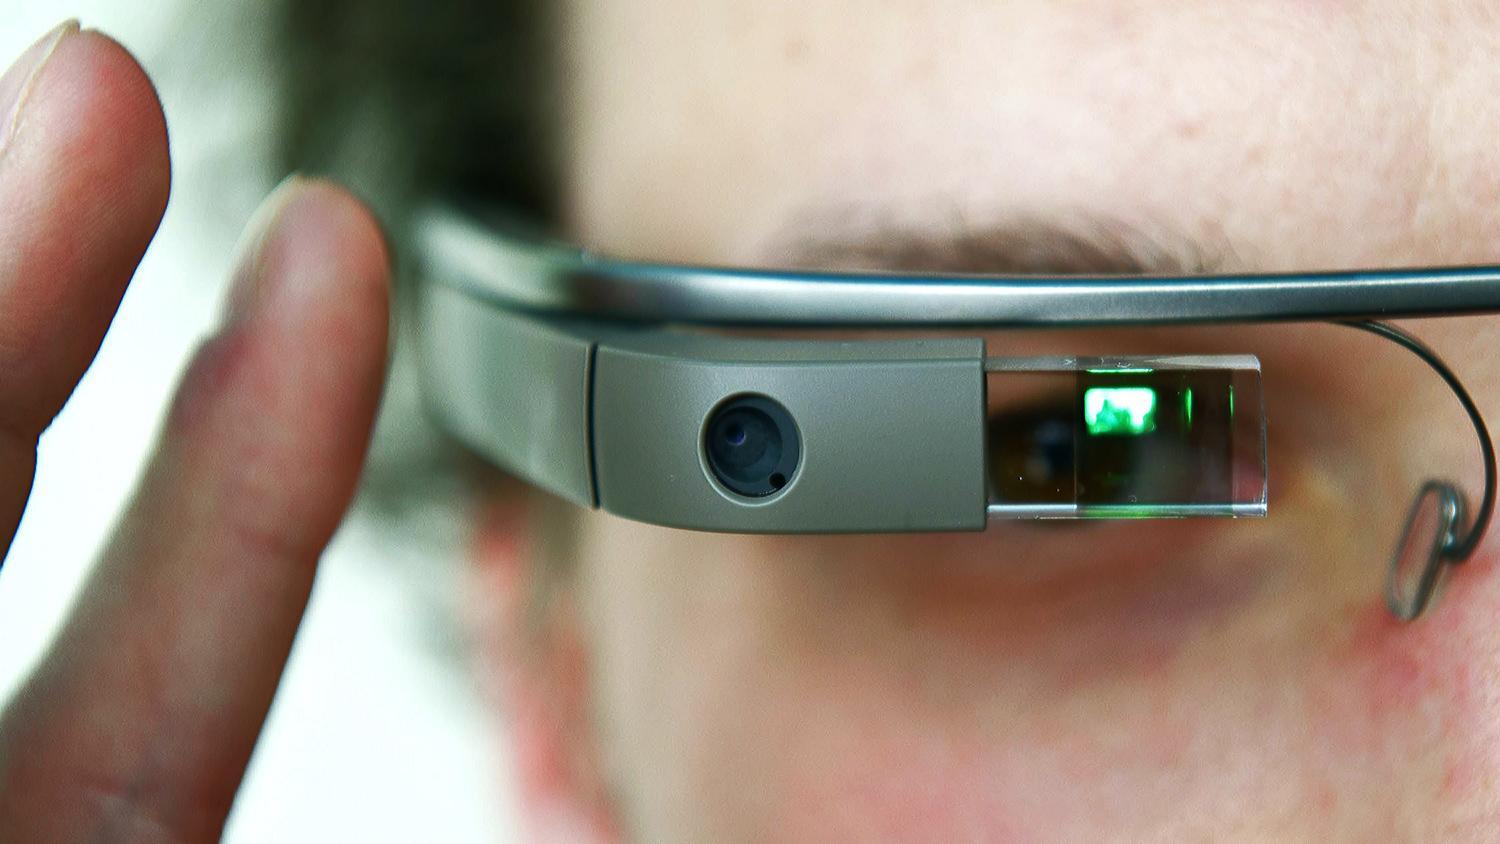 Google glass technology dangerous for drivers: Study